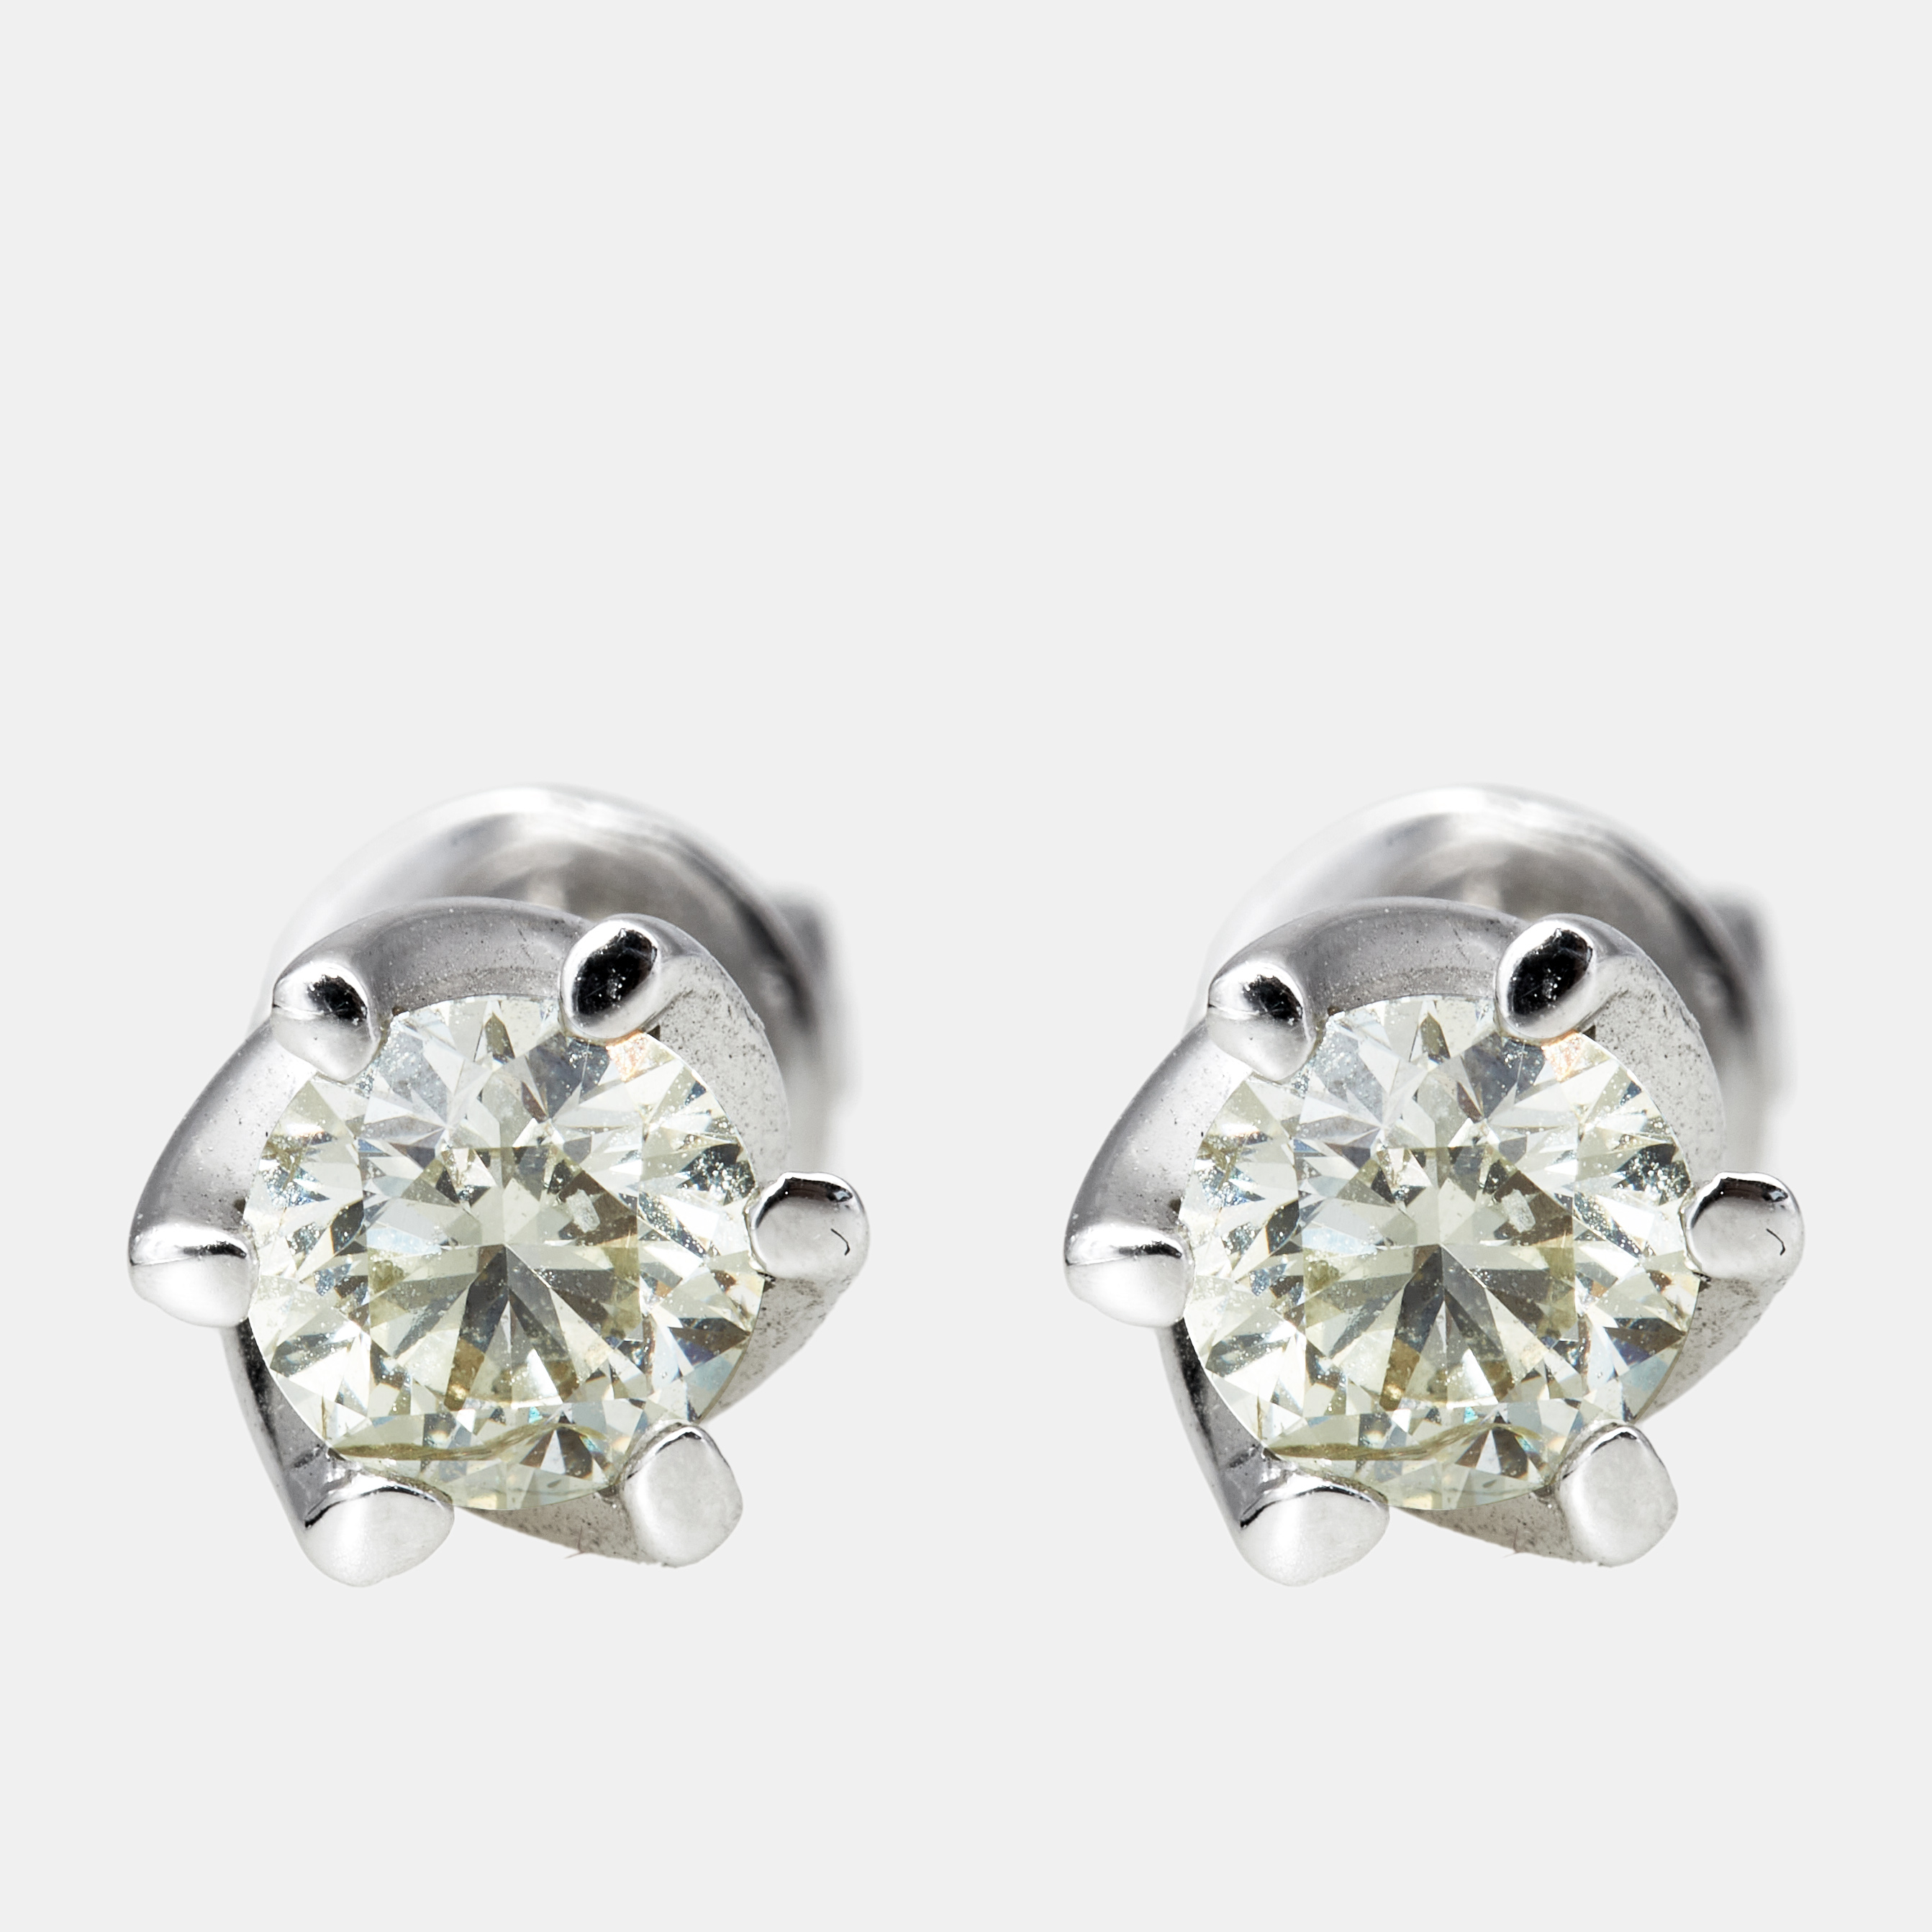 The diamond edit 18k white gold 0.92 ct diamond earrings